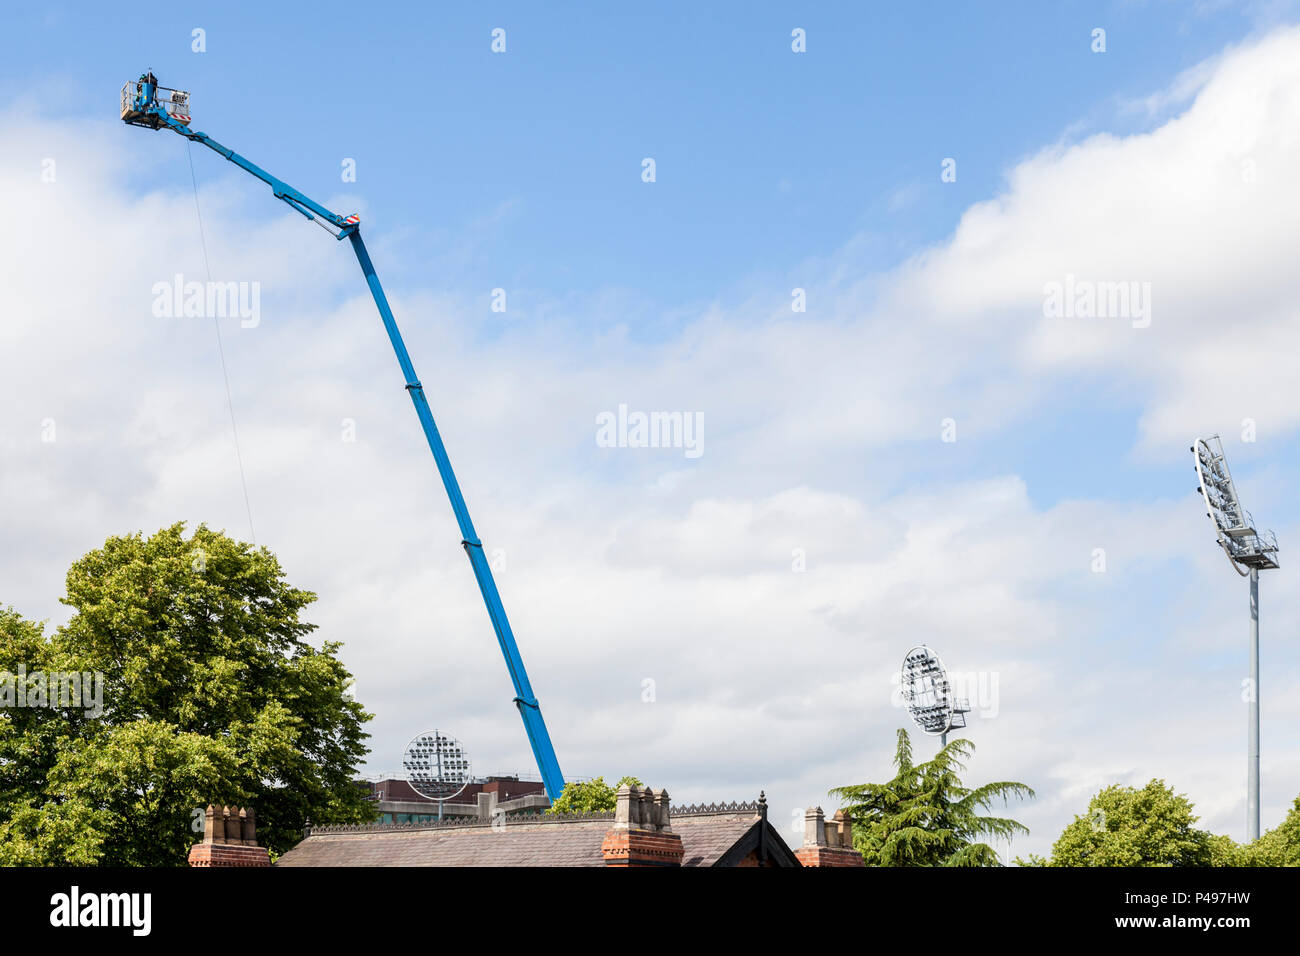 TV camera operator on an elevated platform at an outside broadcast, Trent Bridge Cricket Ground, Nottinghamshire, England, UK Stock Photo